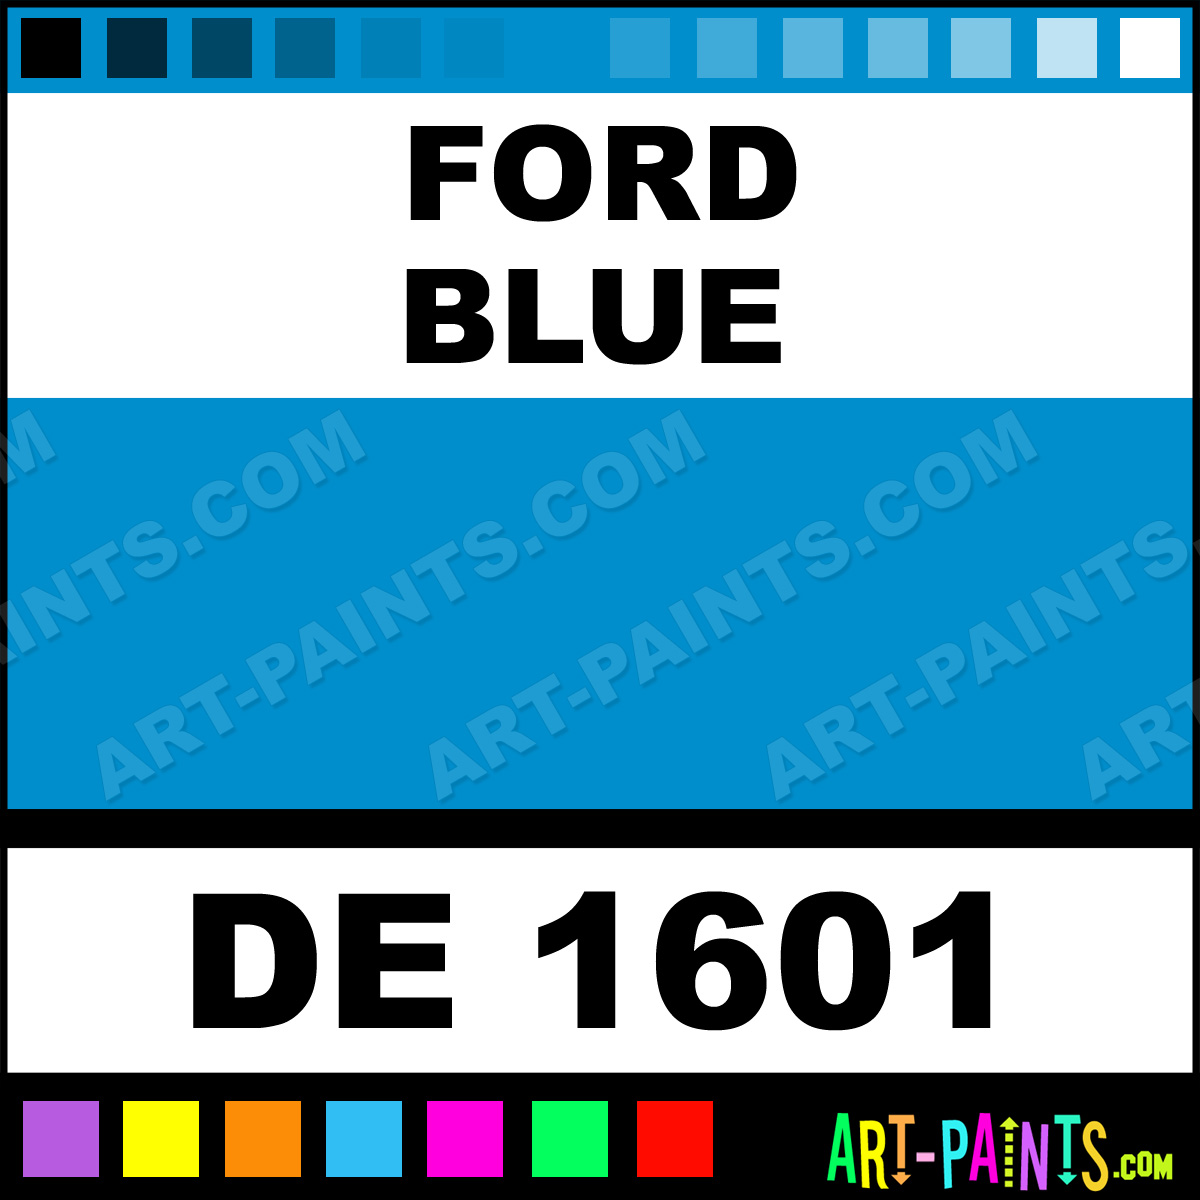 Ford-Blue-lg.jpg